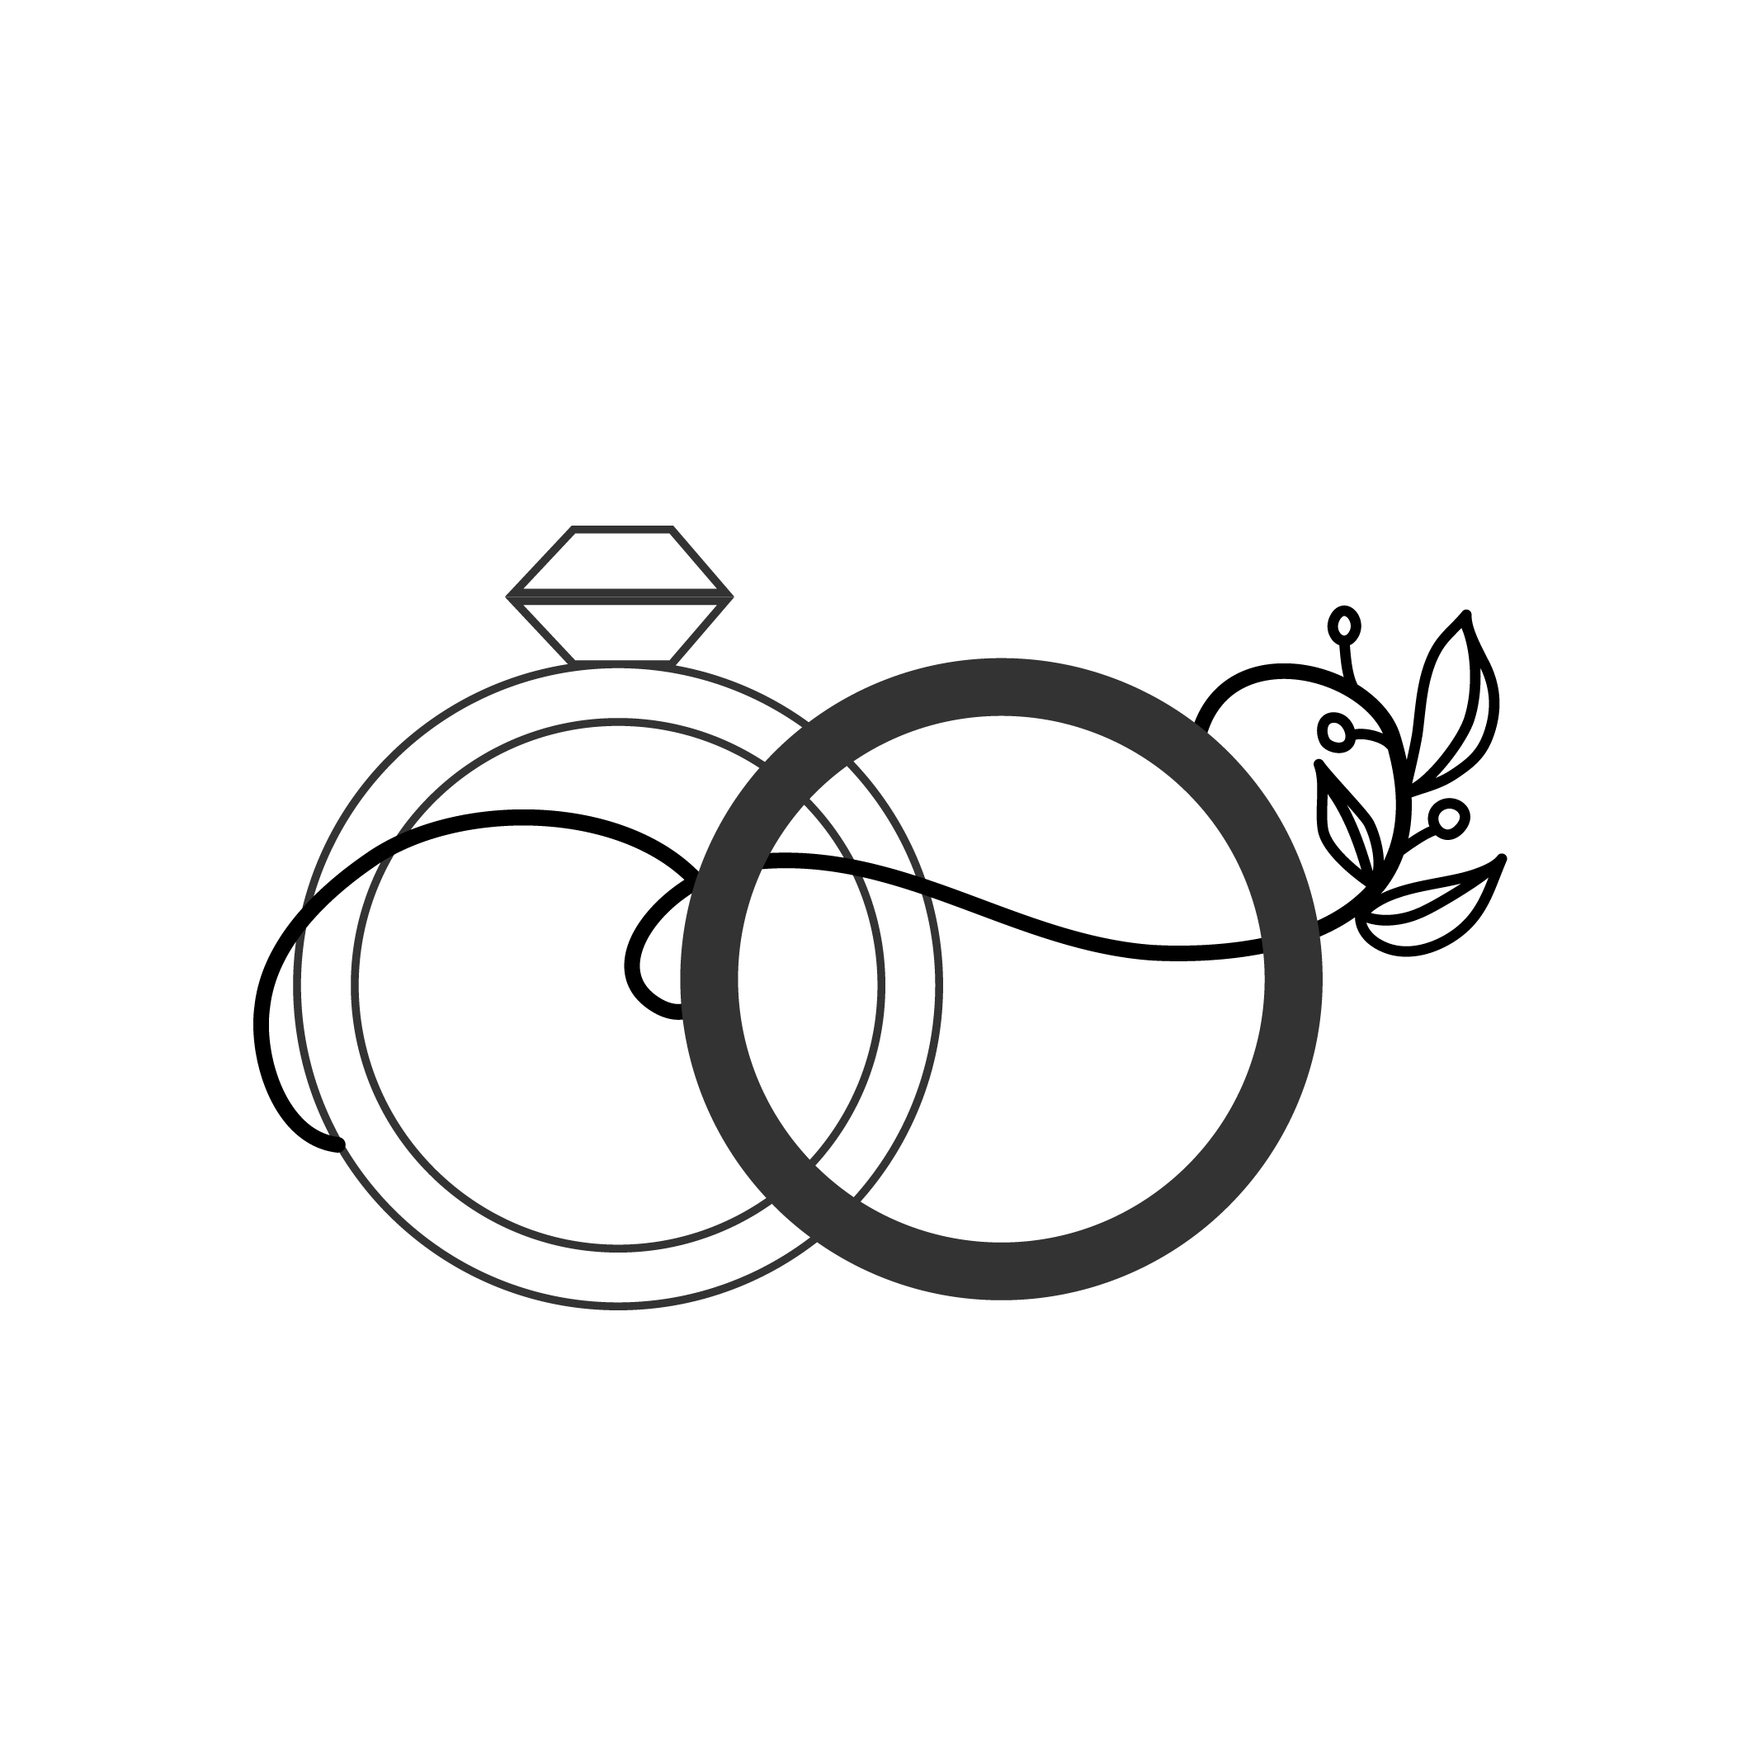 Free Decorative Wedding Silhouette in Illustrator, EPS, SVG, JPG, PNG